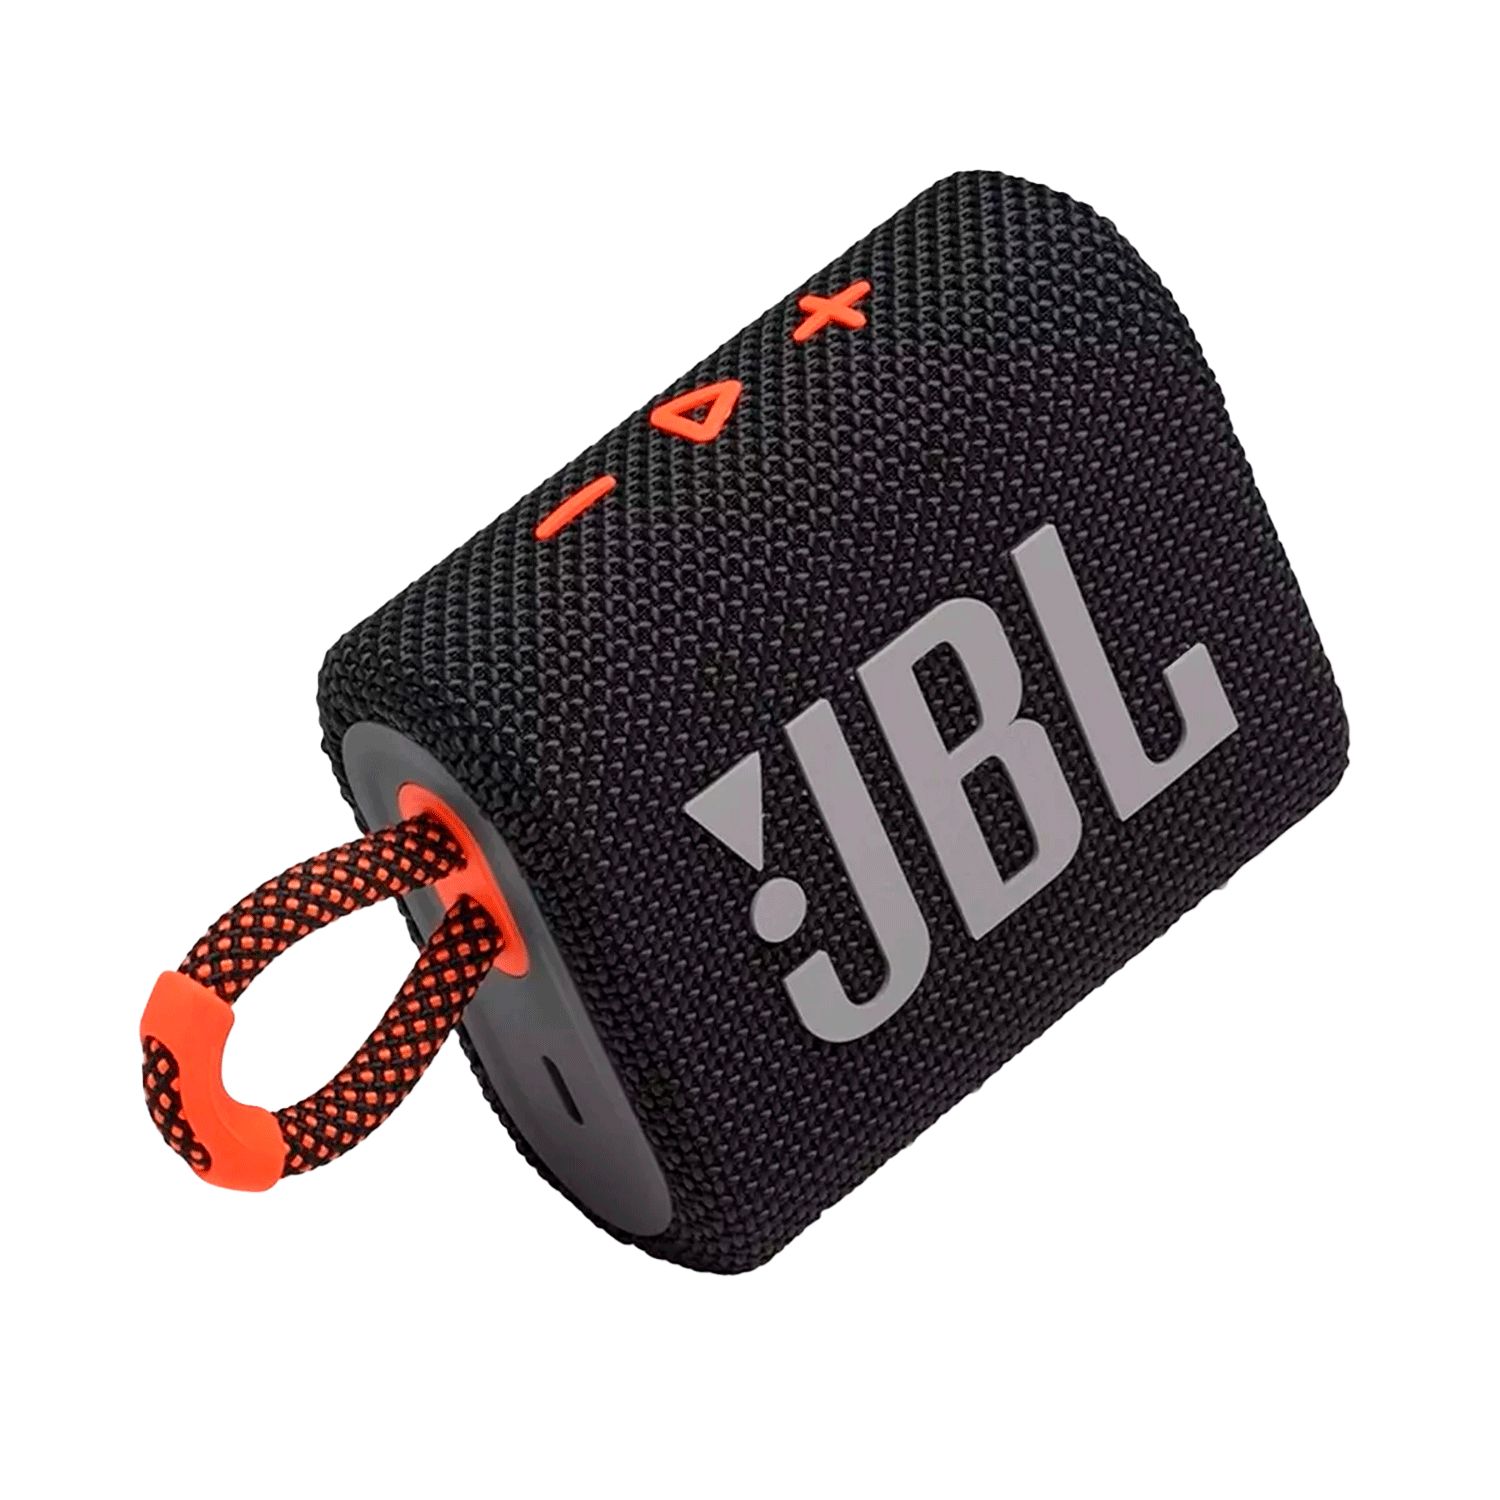 Caixa de Som JBL Go 3 - Preto e Laranja